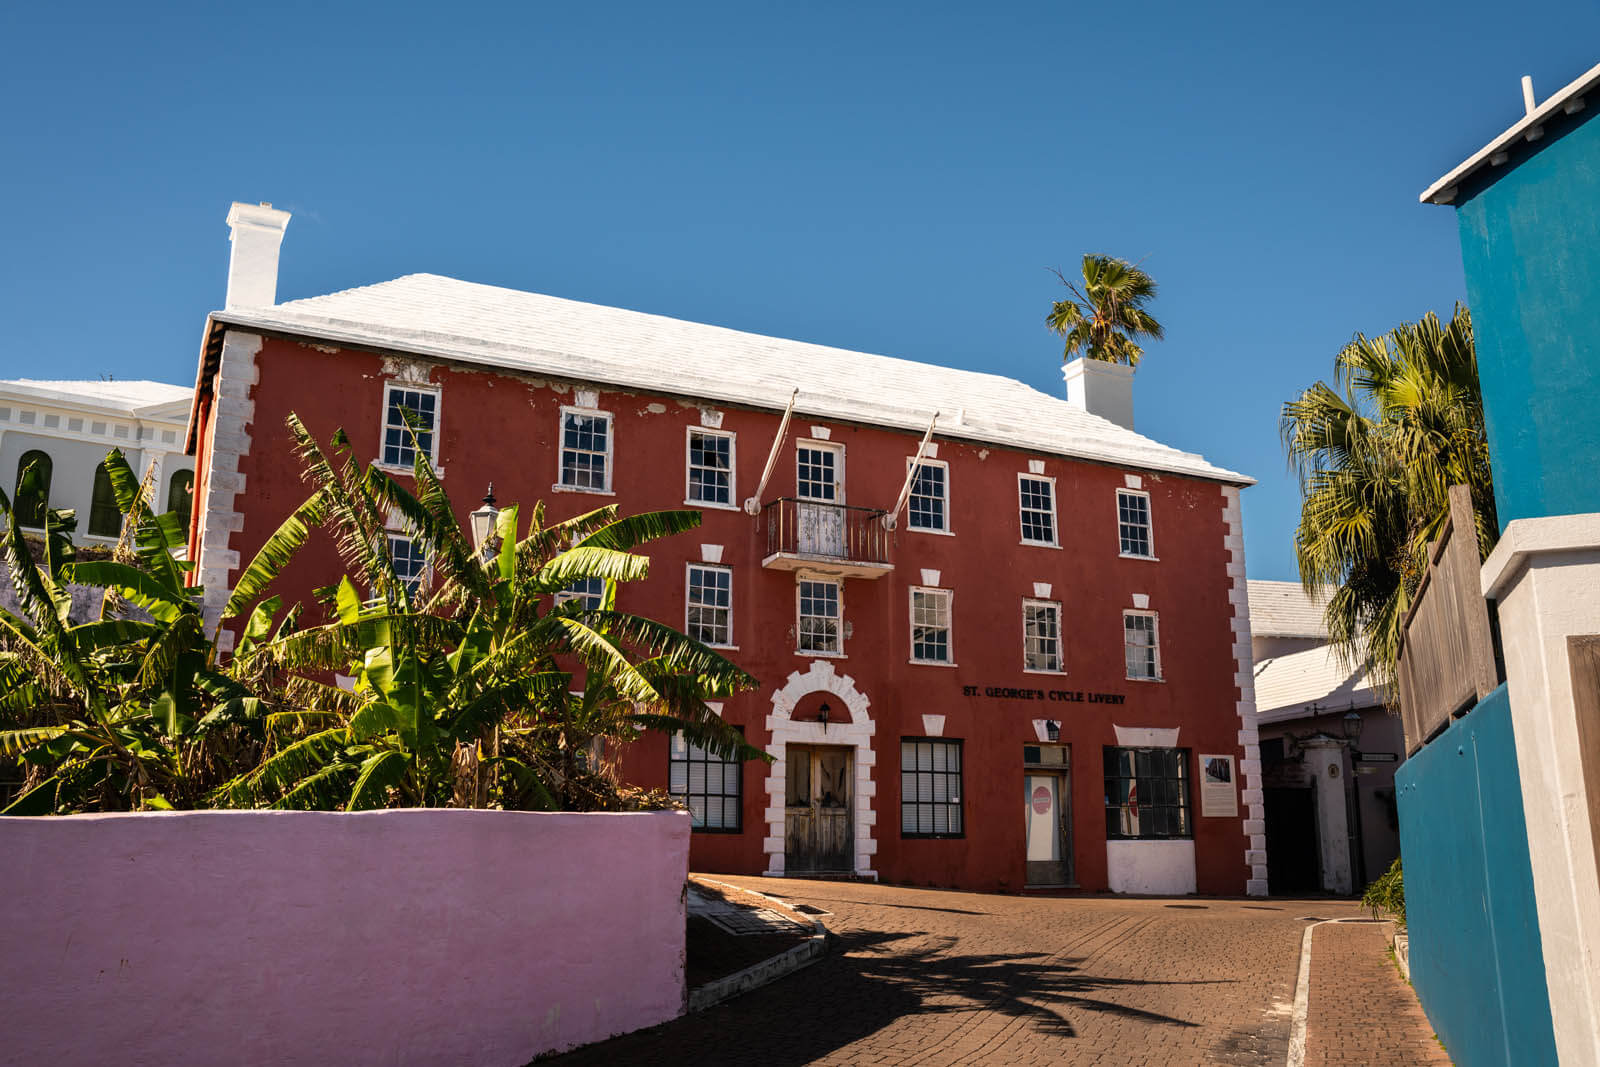 historic buildings in the town of St George in Bermuda